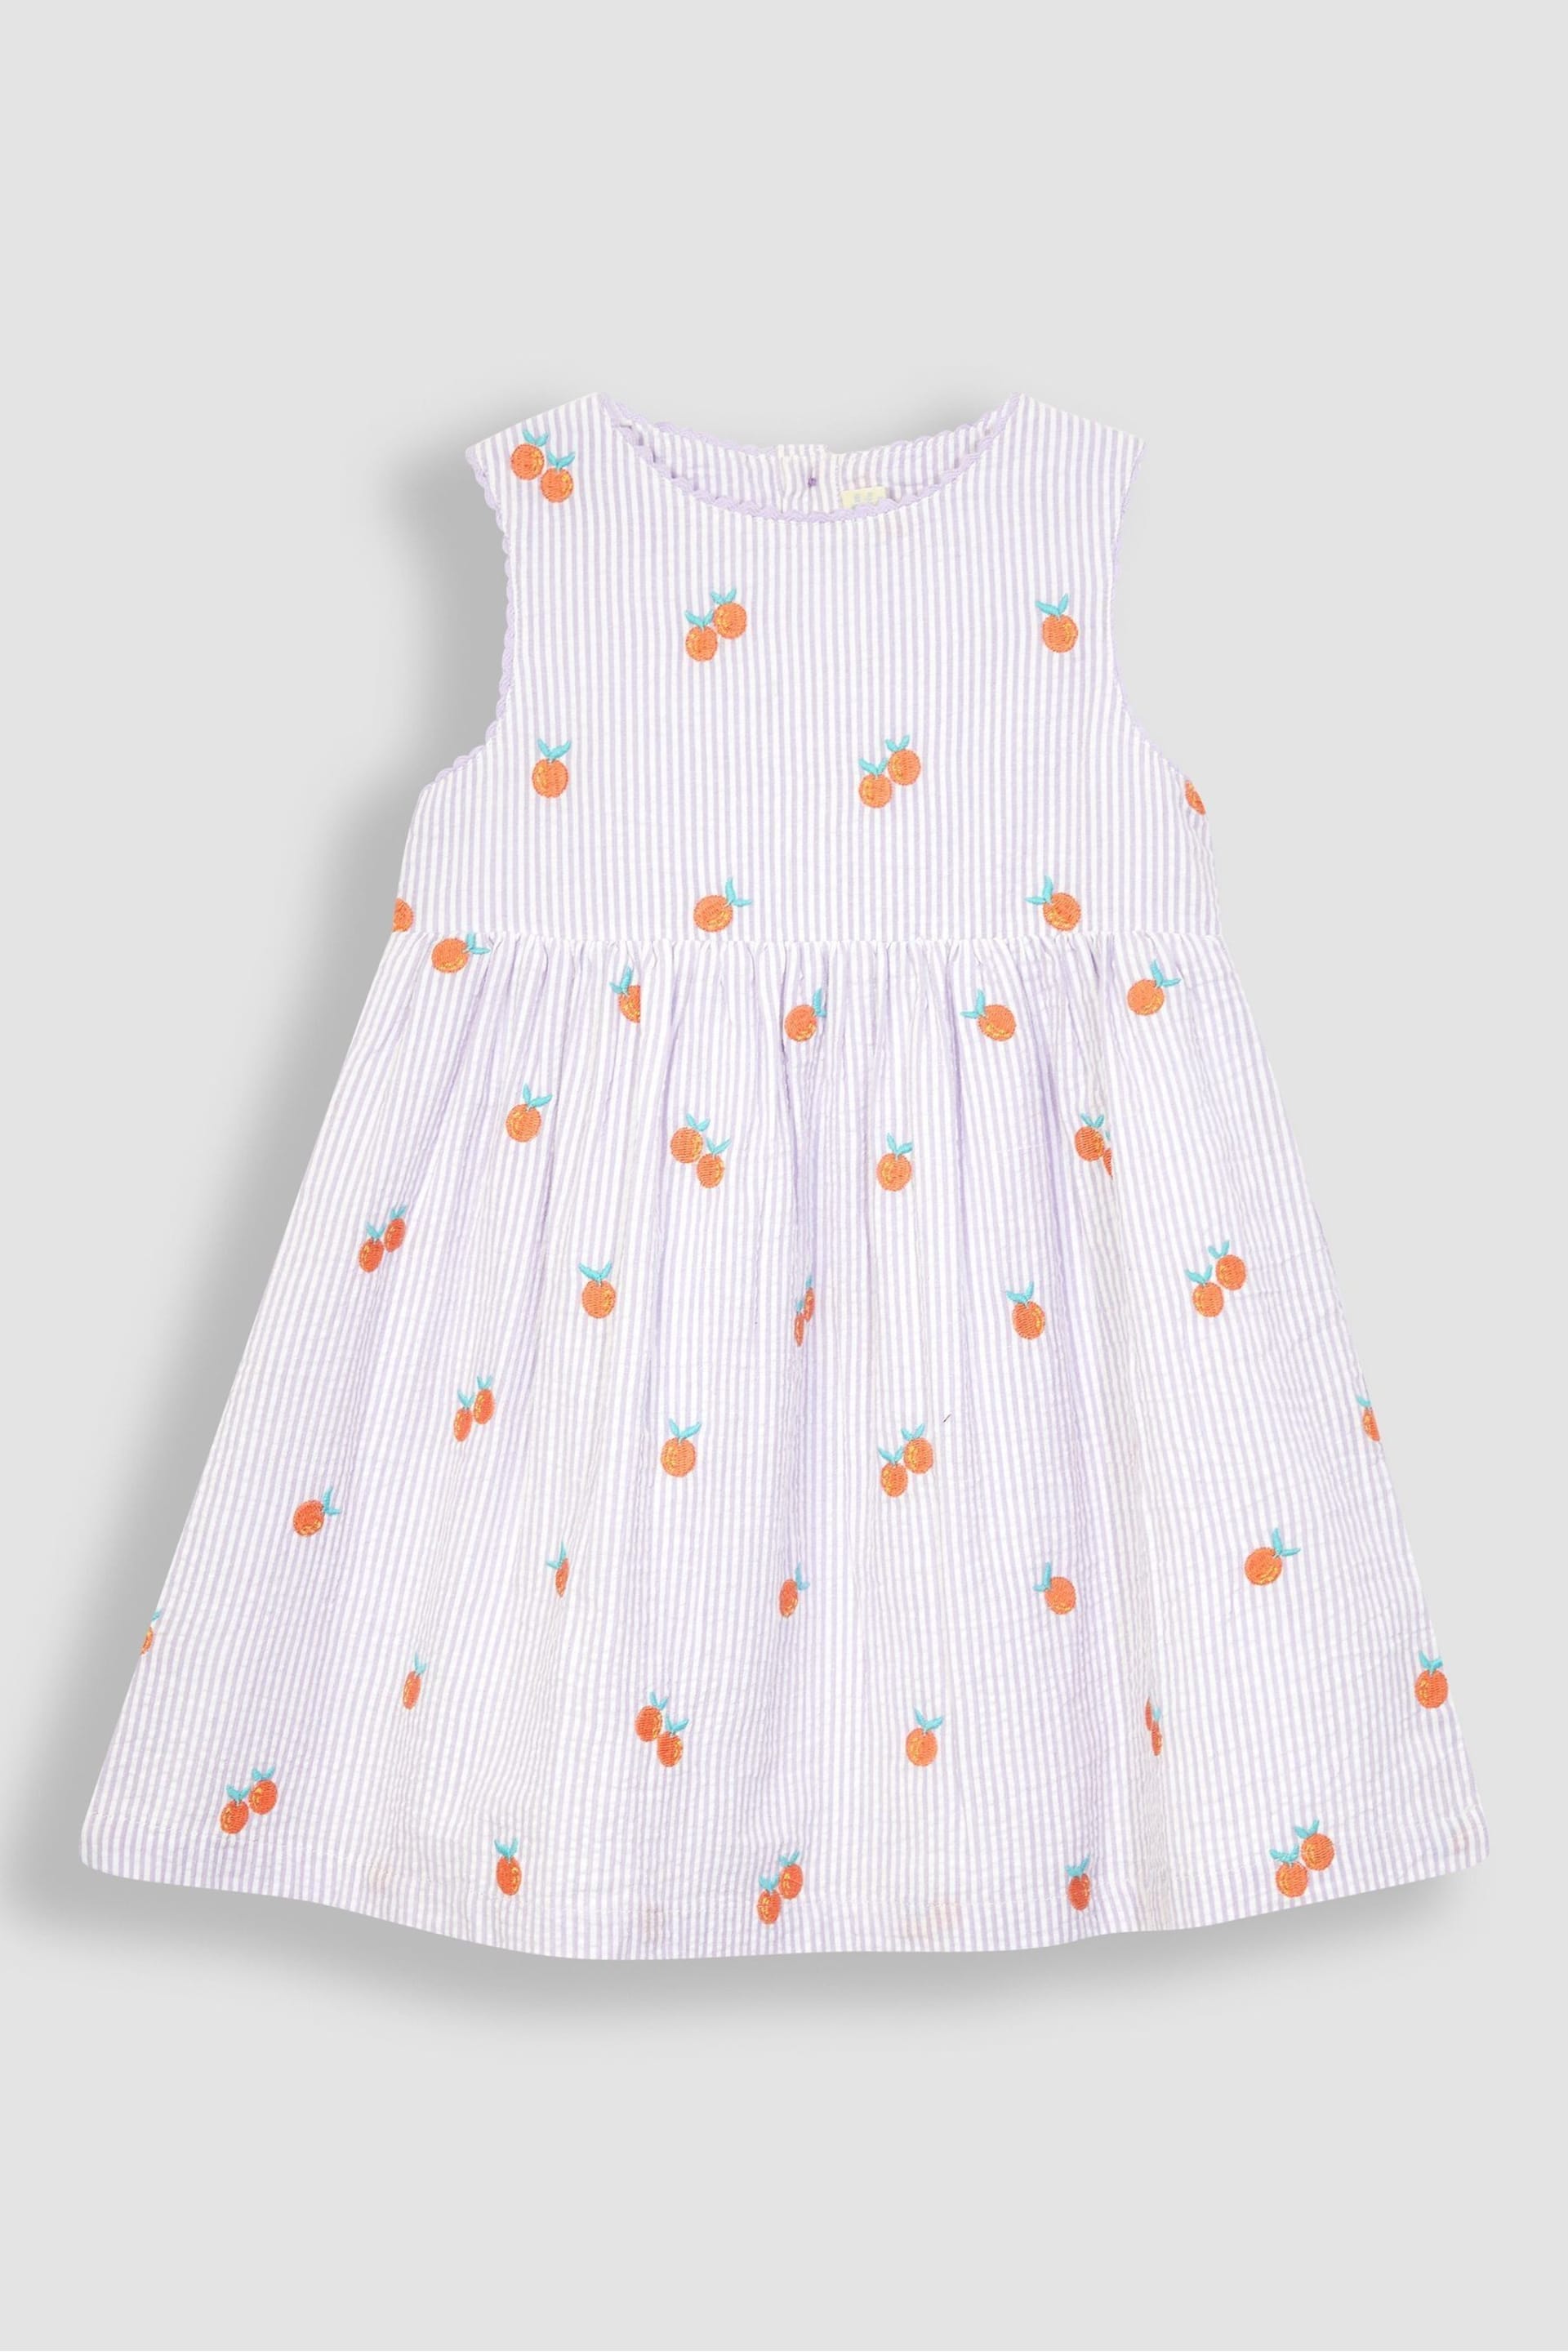 JoJo Maman Bébé Lilac Orange Stripe Embroidered Summer Dress - Image 1 of 3